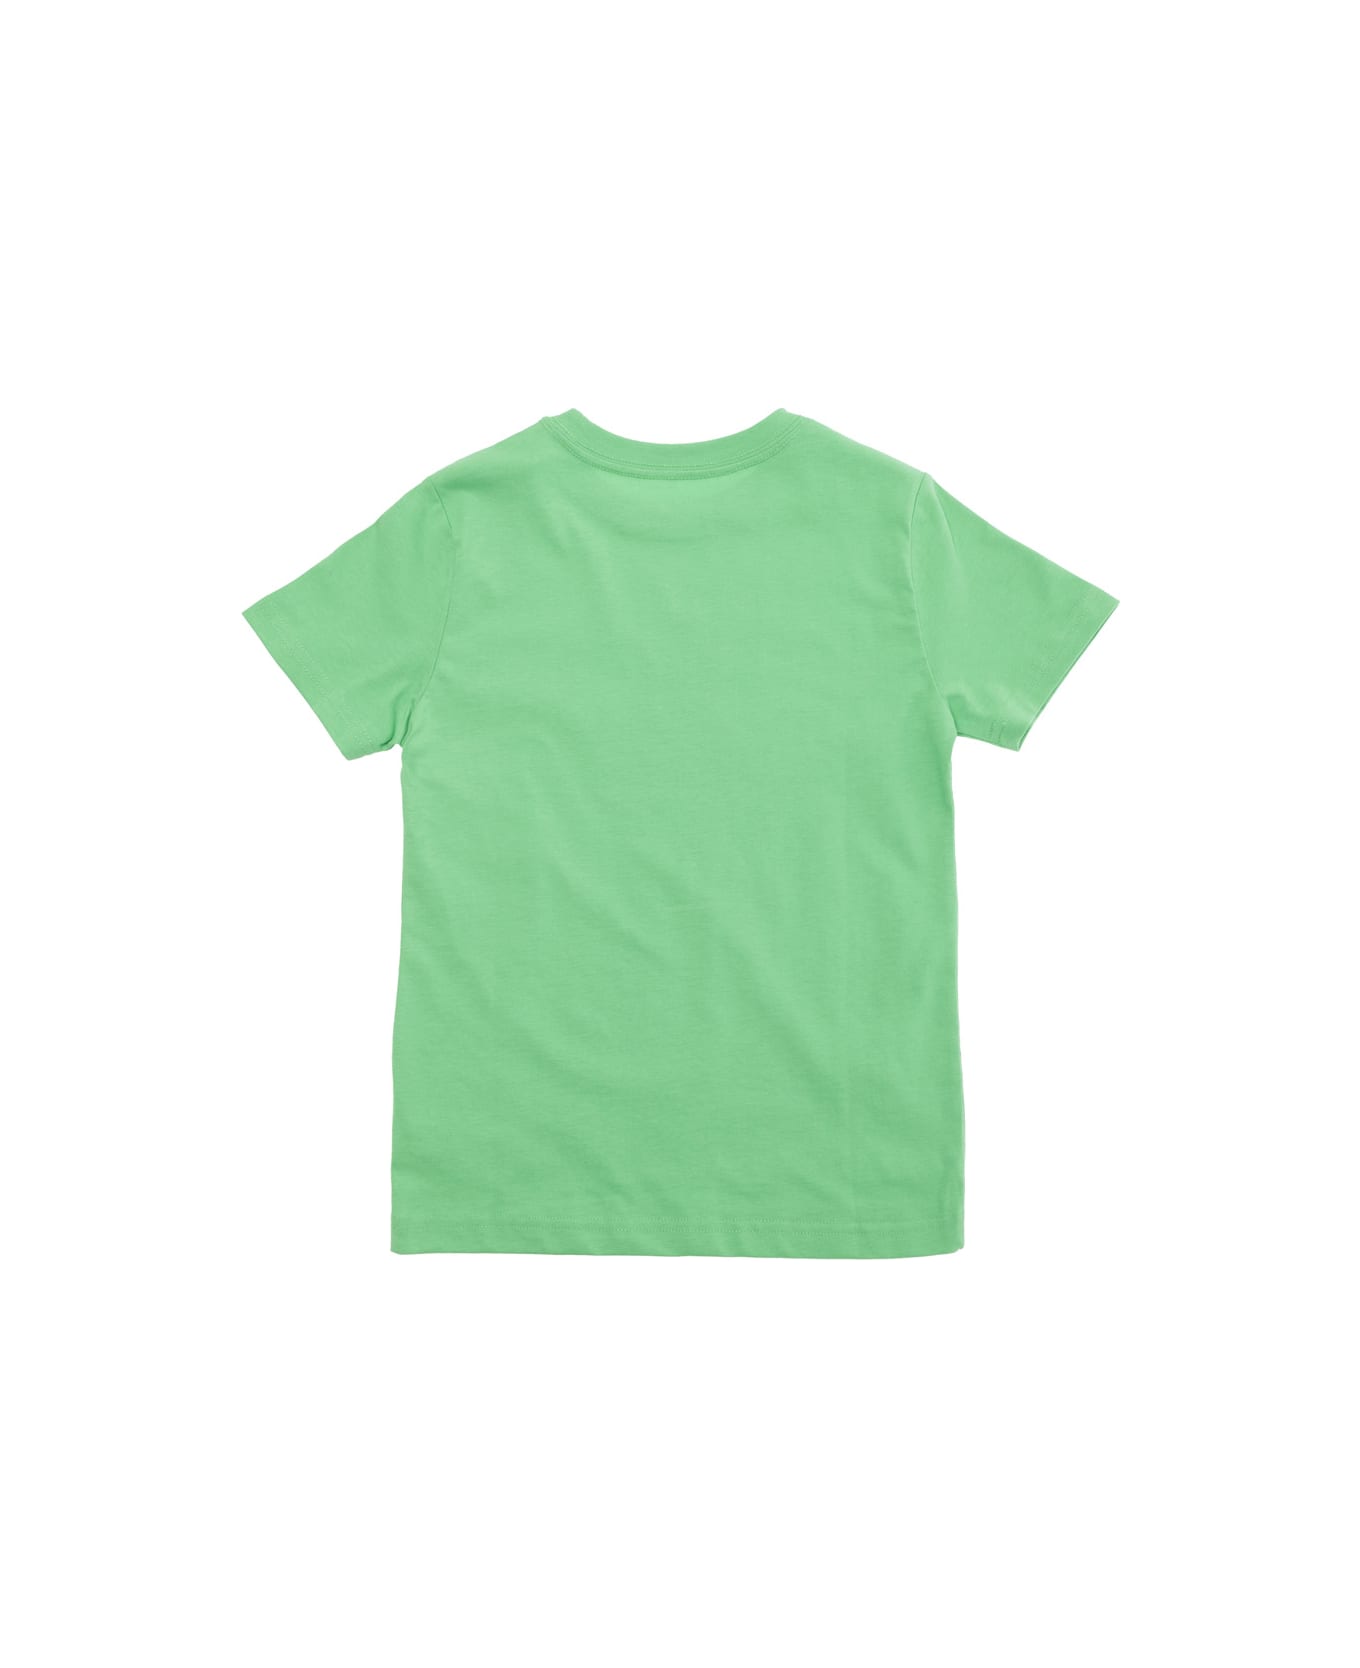 Polo Ralph Lauren Green T-shirt With Polo Bear Print In Jersey Boy - Green